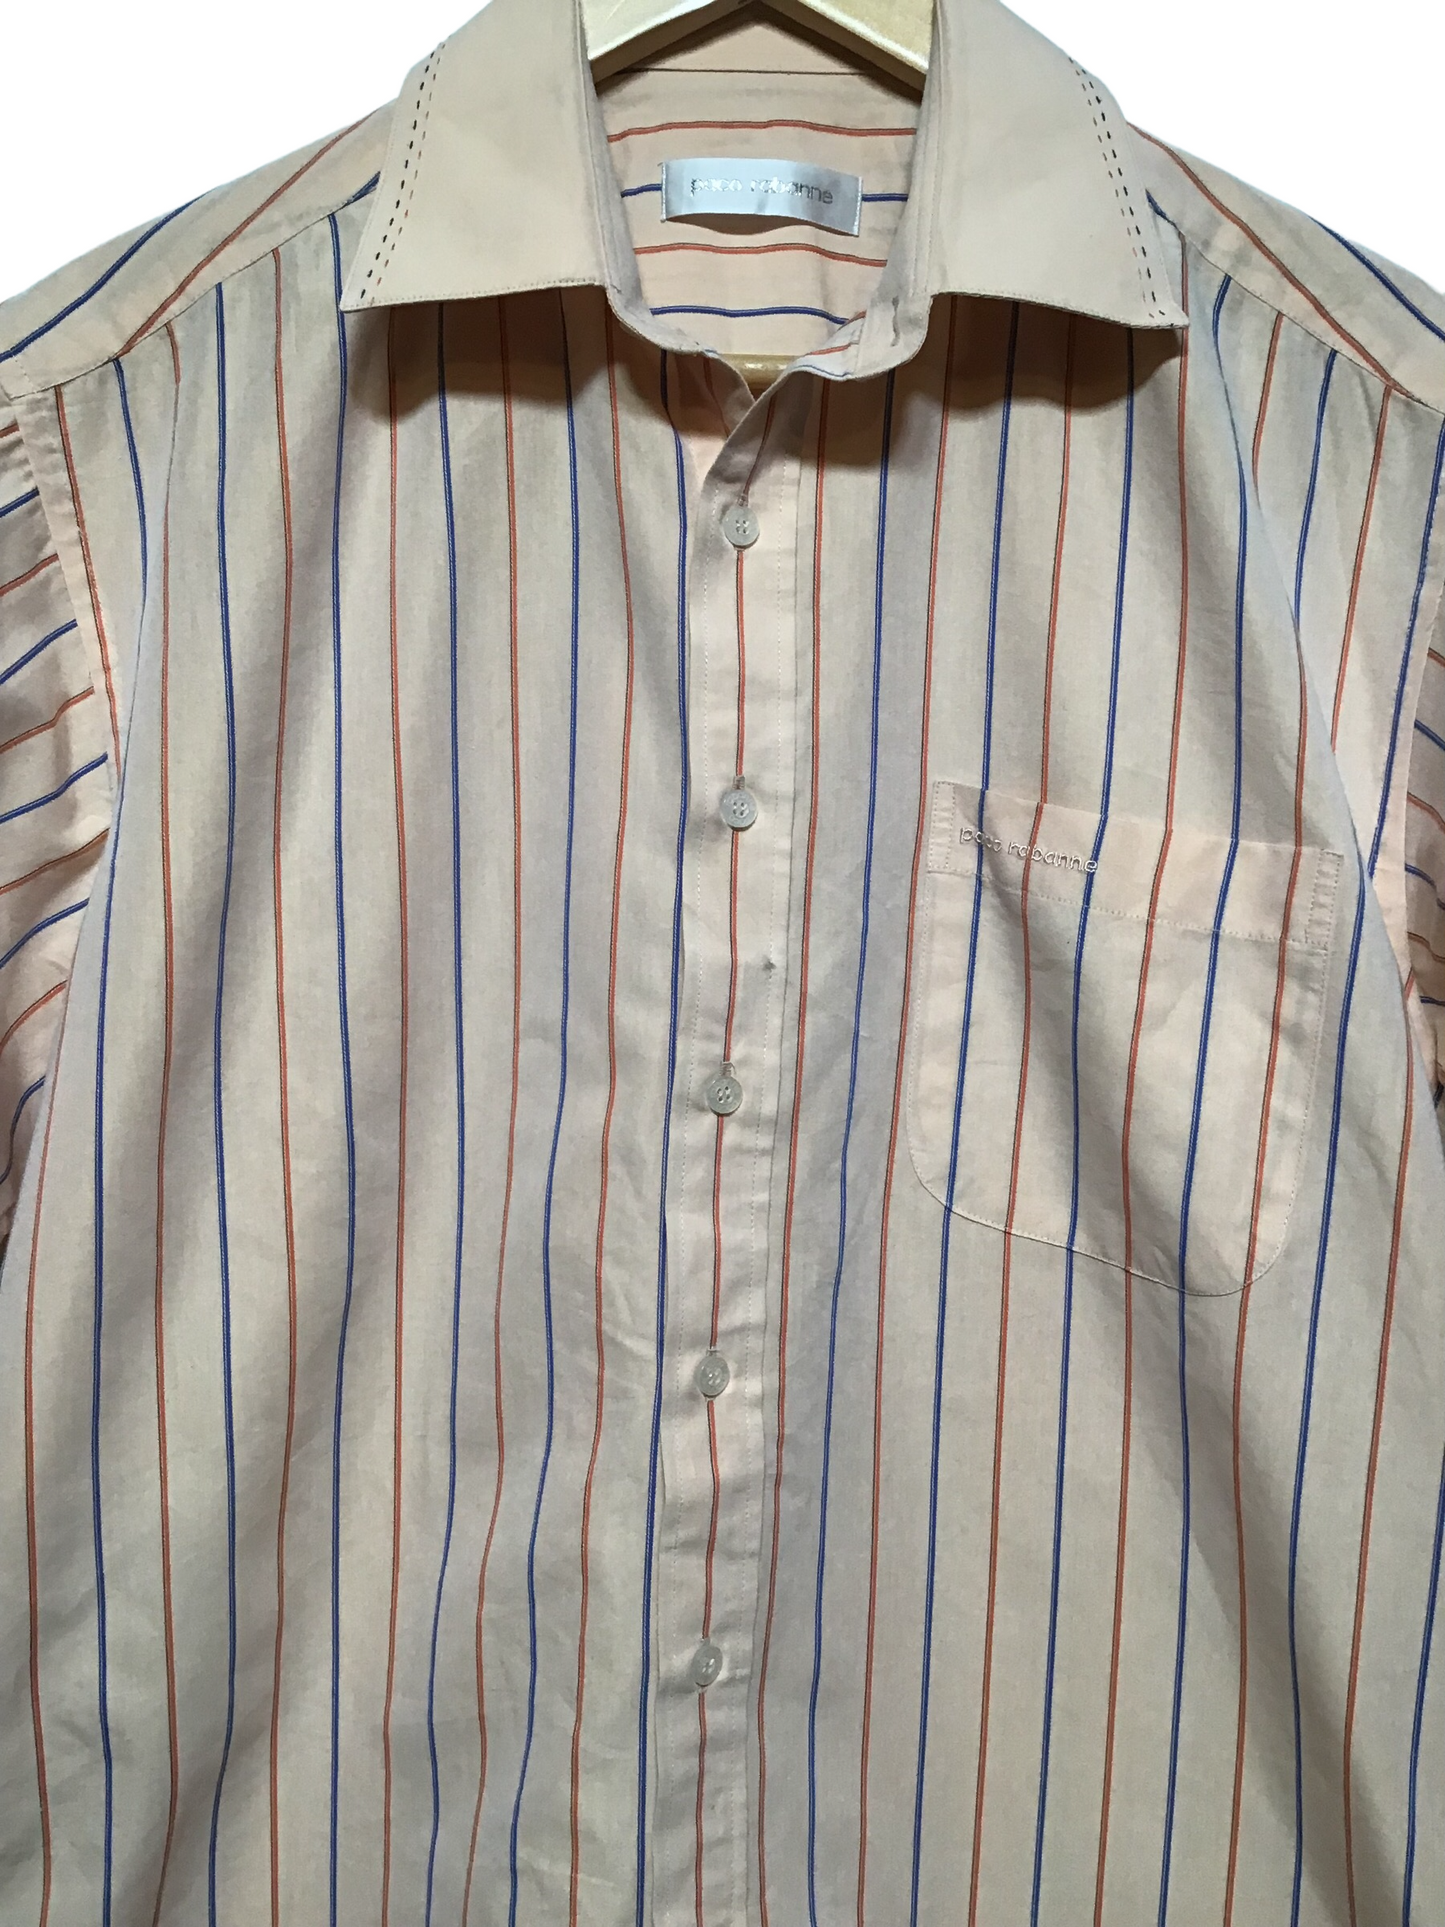 Paco Rabanne Short Sleeve Shirt (Size M)